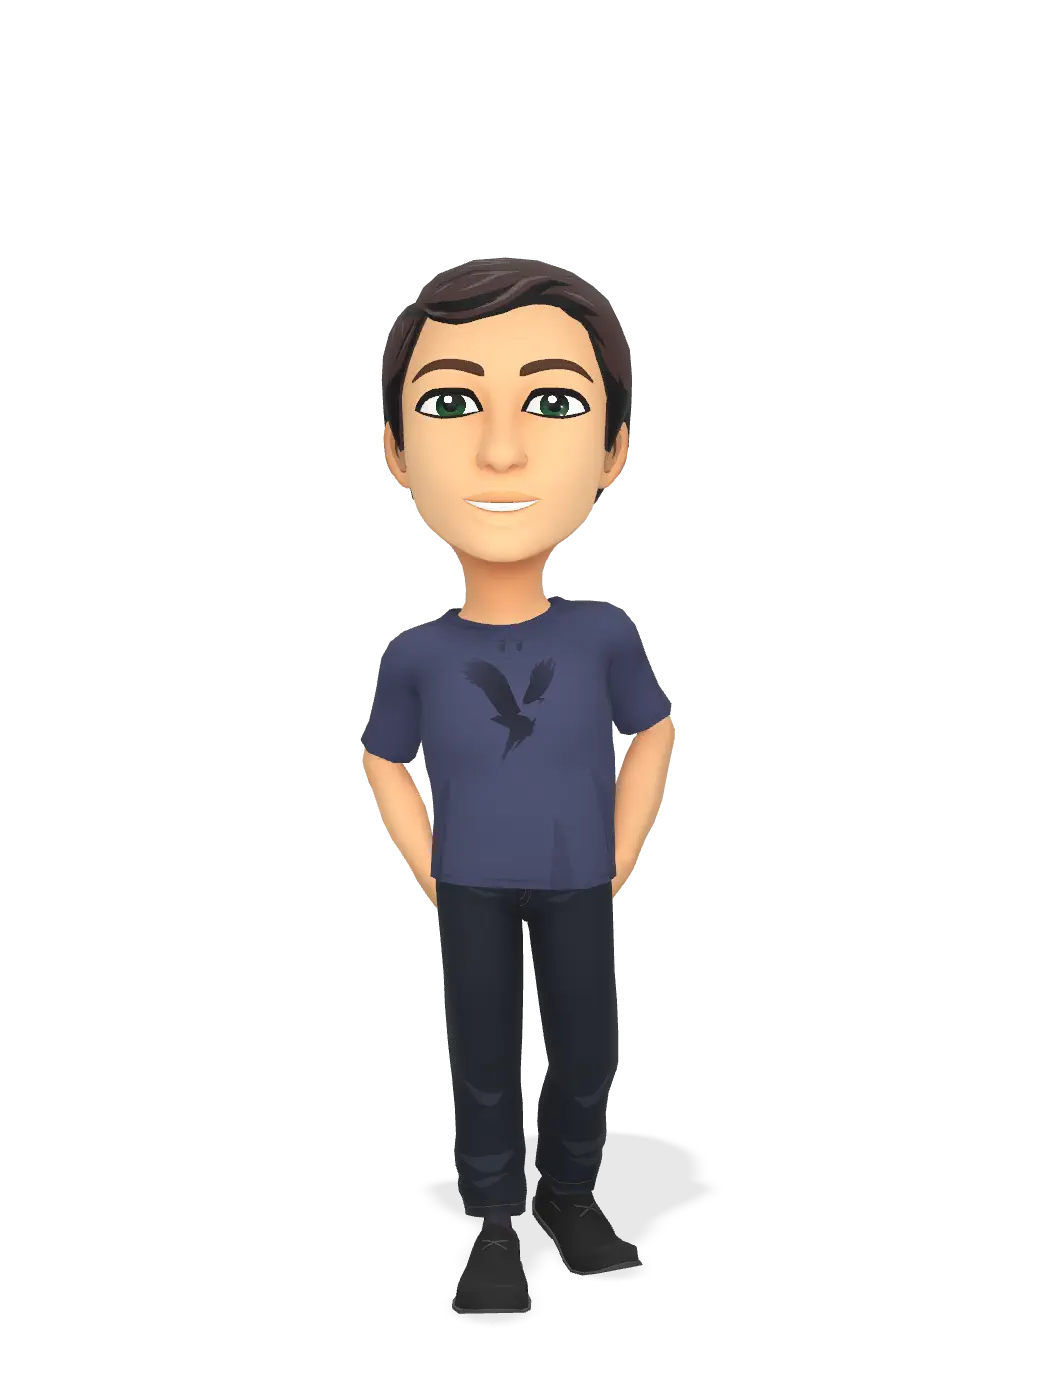 3D Bitmoji for alexgaudio2021 avatar